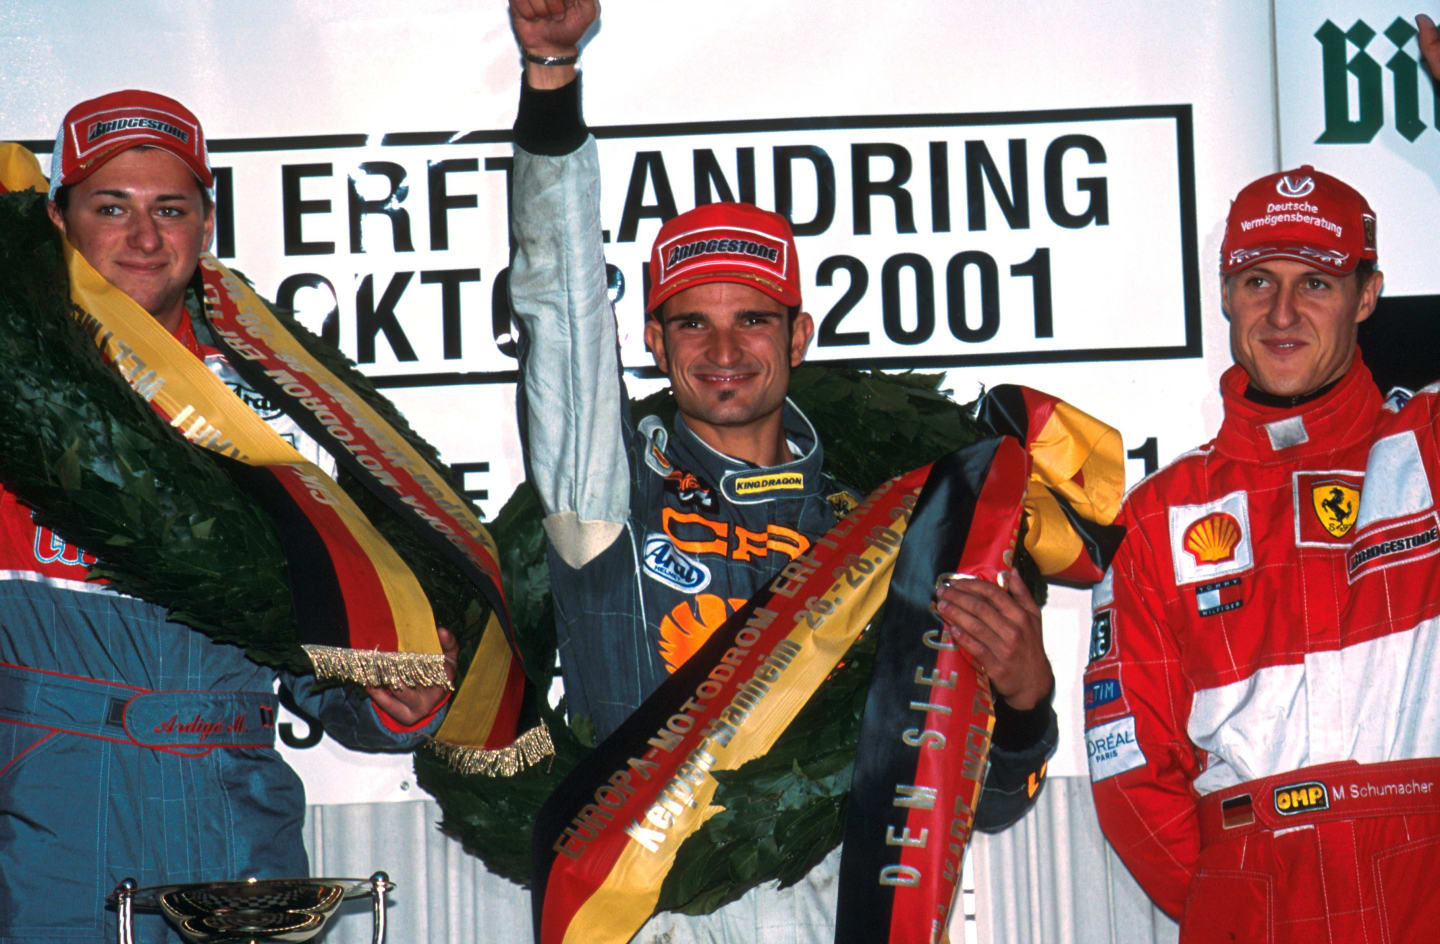 L-R: Marco Ardigo (ITA), Vitantonio Liuzzi (ITA), Michael Schumacher (GER)
World Super A